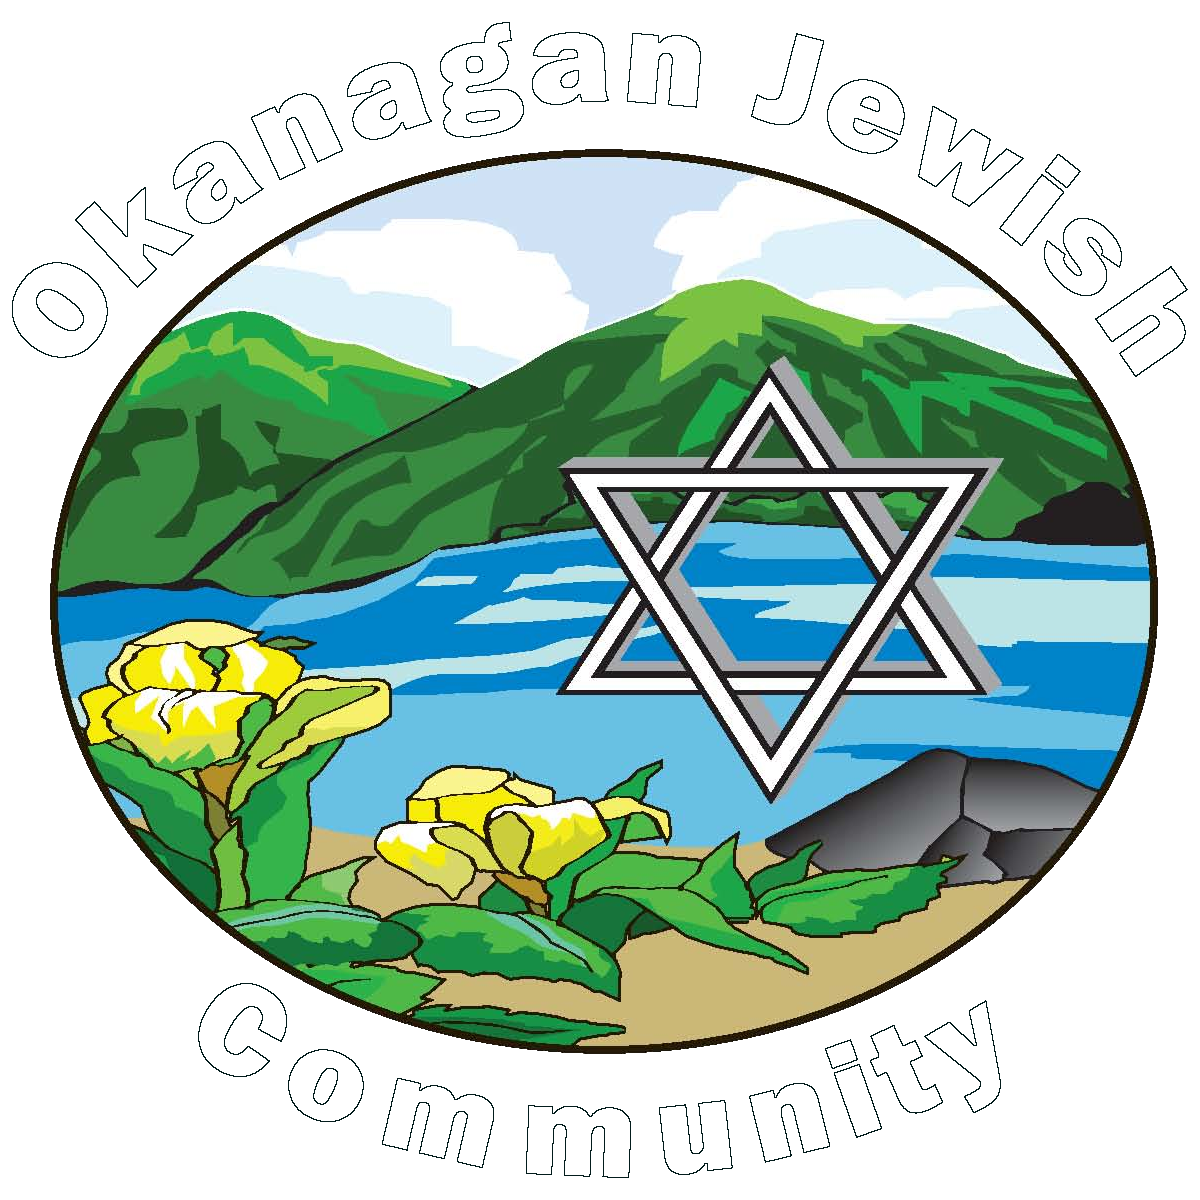 Okanagan Jewish Community Centre